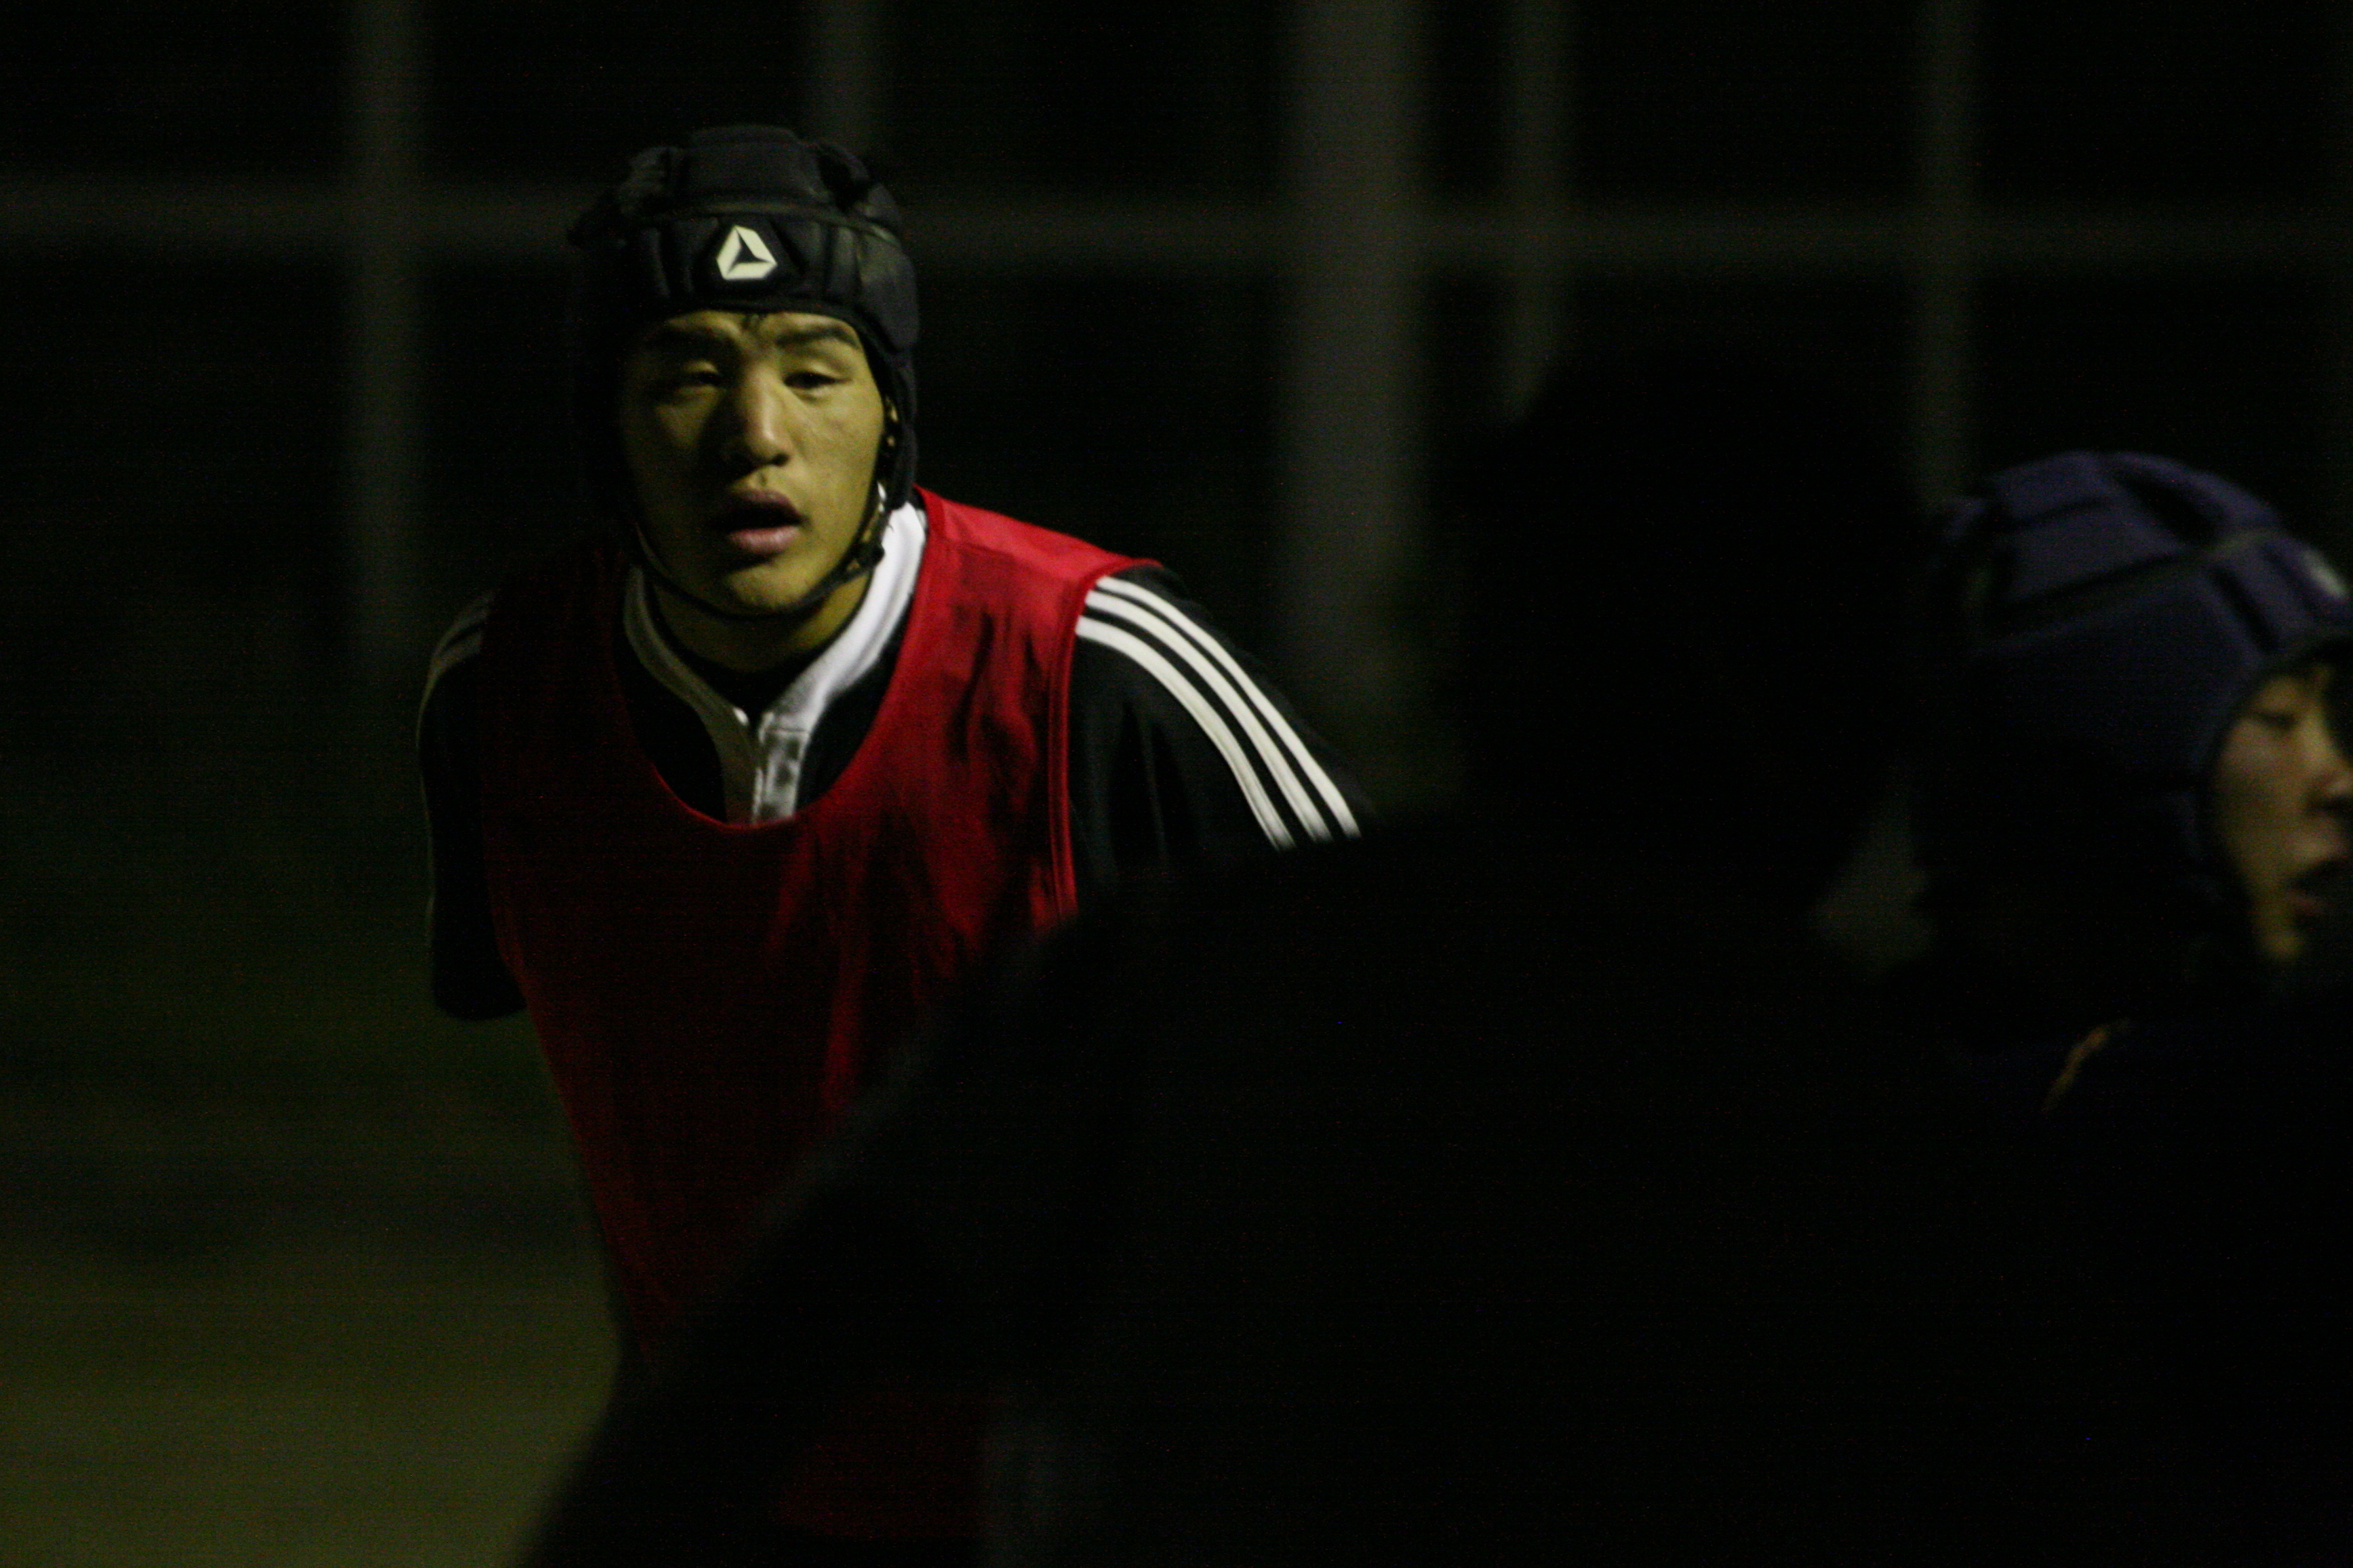 http://kokura-rugby.sakura.ne.jp/2011.10.27-1.JPG